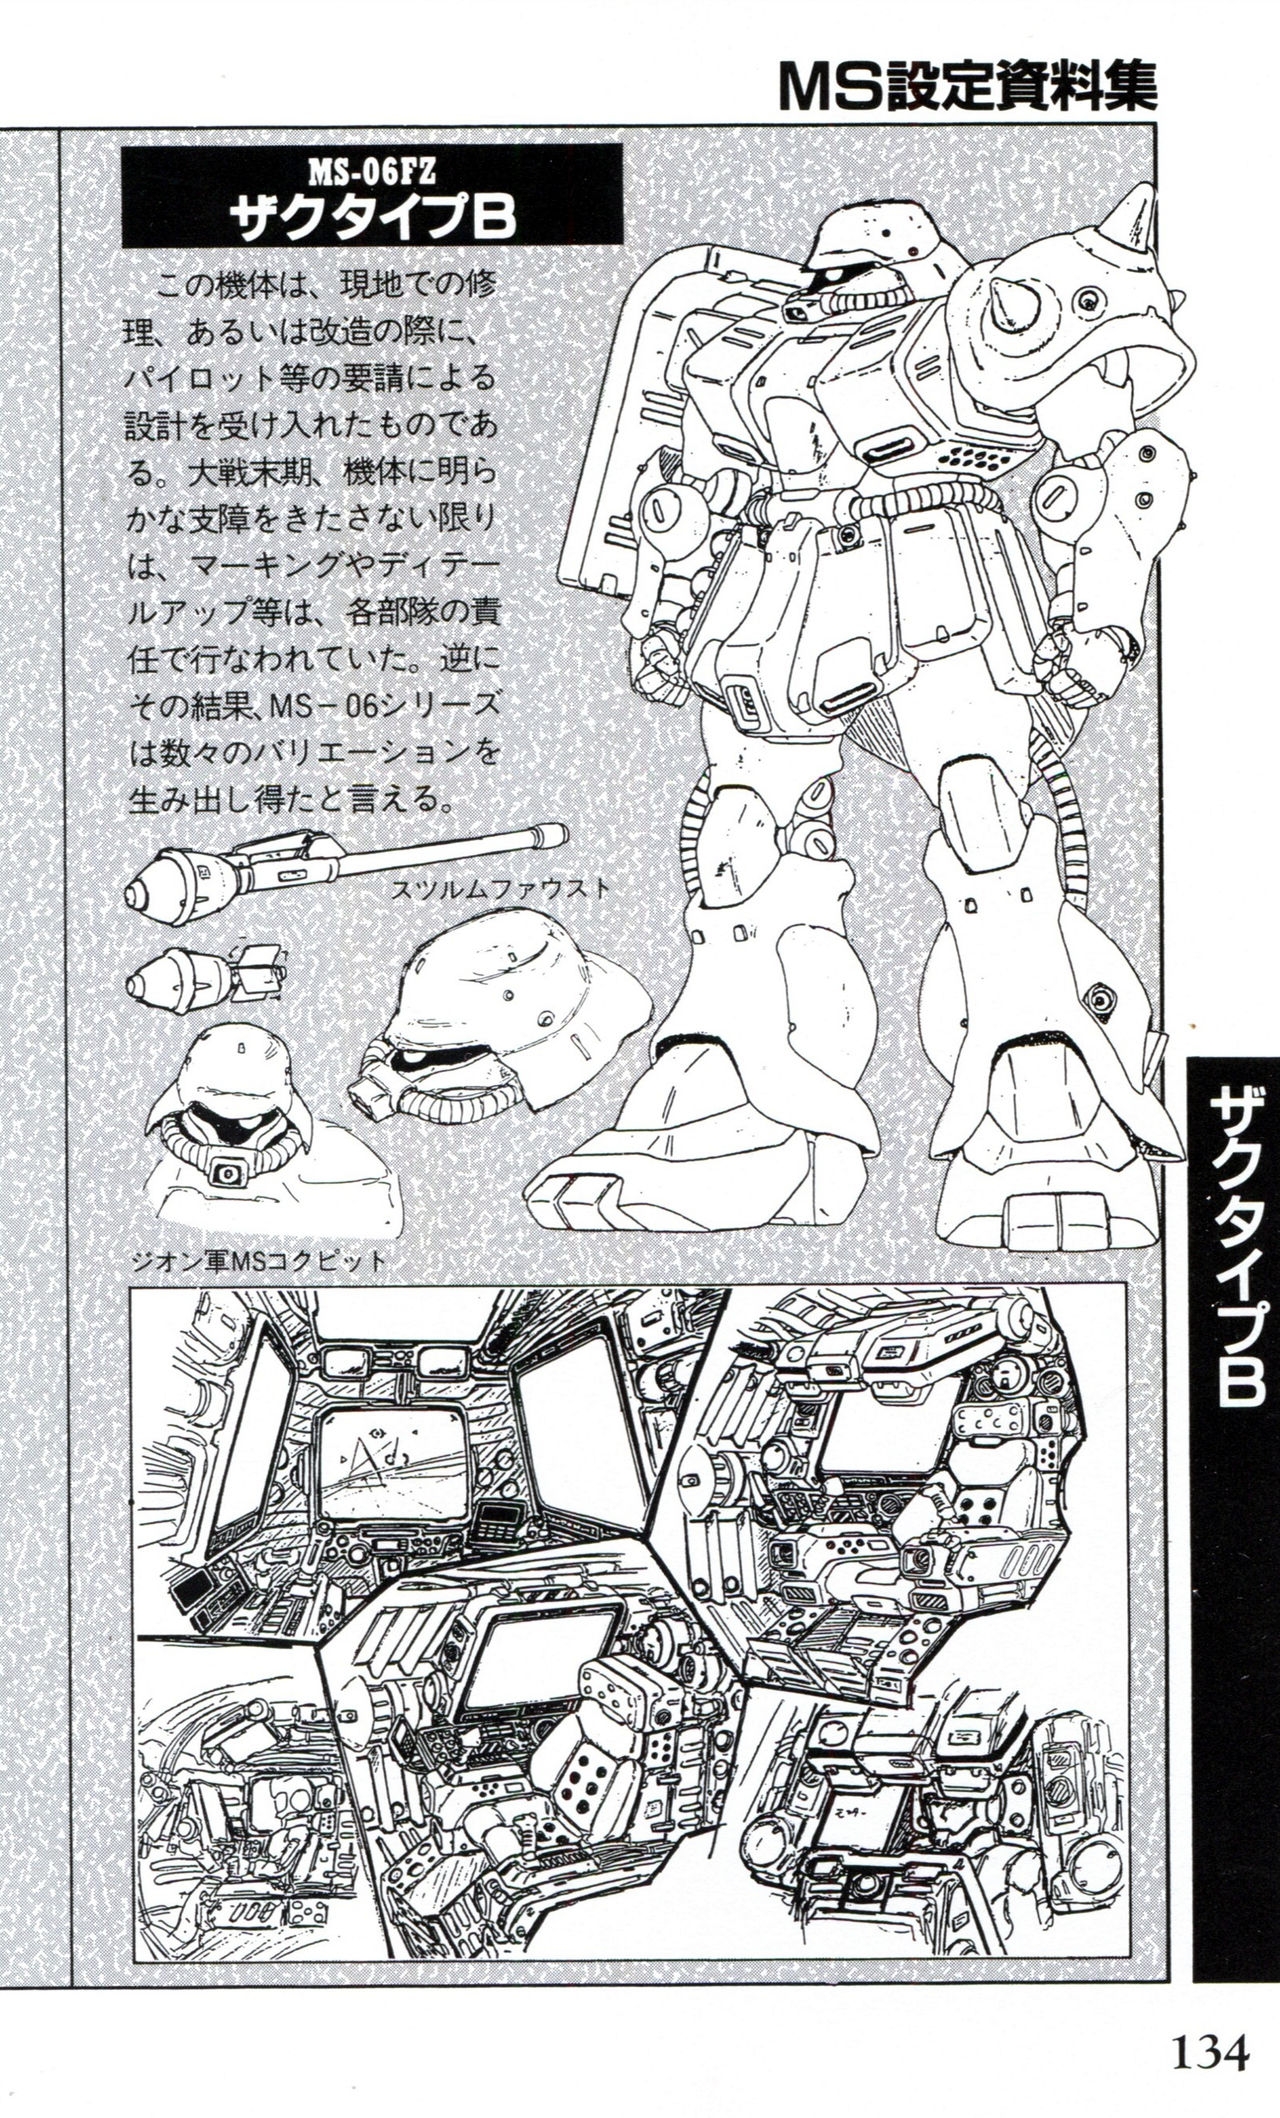 Mobile Suit Gundam U.C. Box MS Gundam Encyclopedia NO.01 - Mobile Suit Gundam 133